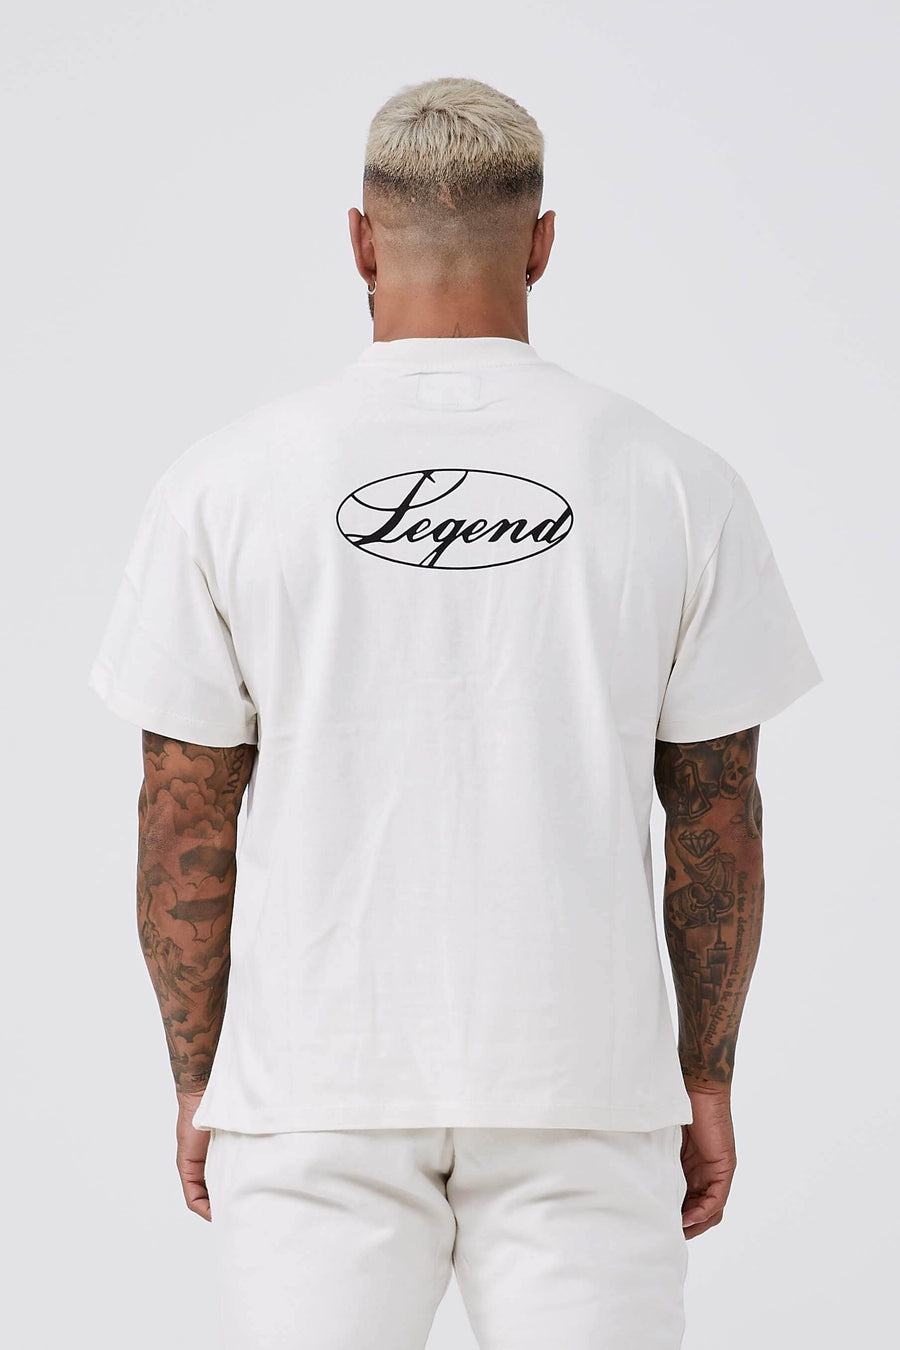 Legend London Tshirts BADGE OVERSIZED T-SHIRT - CREAM